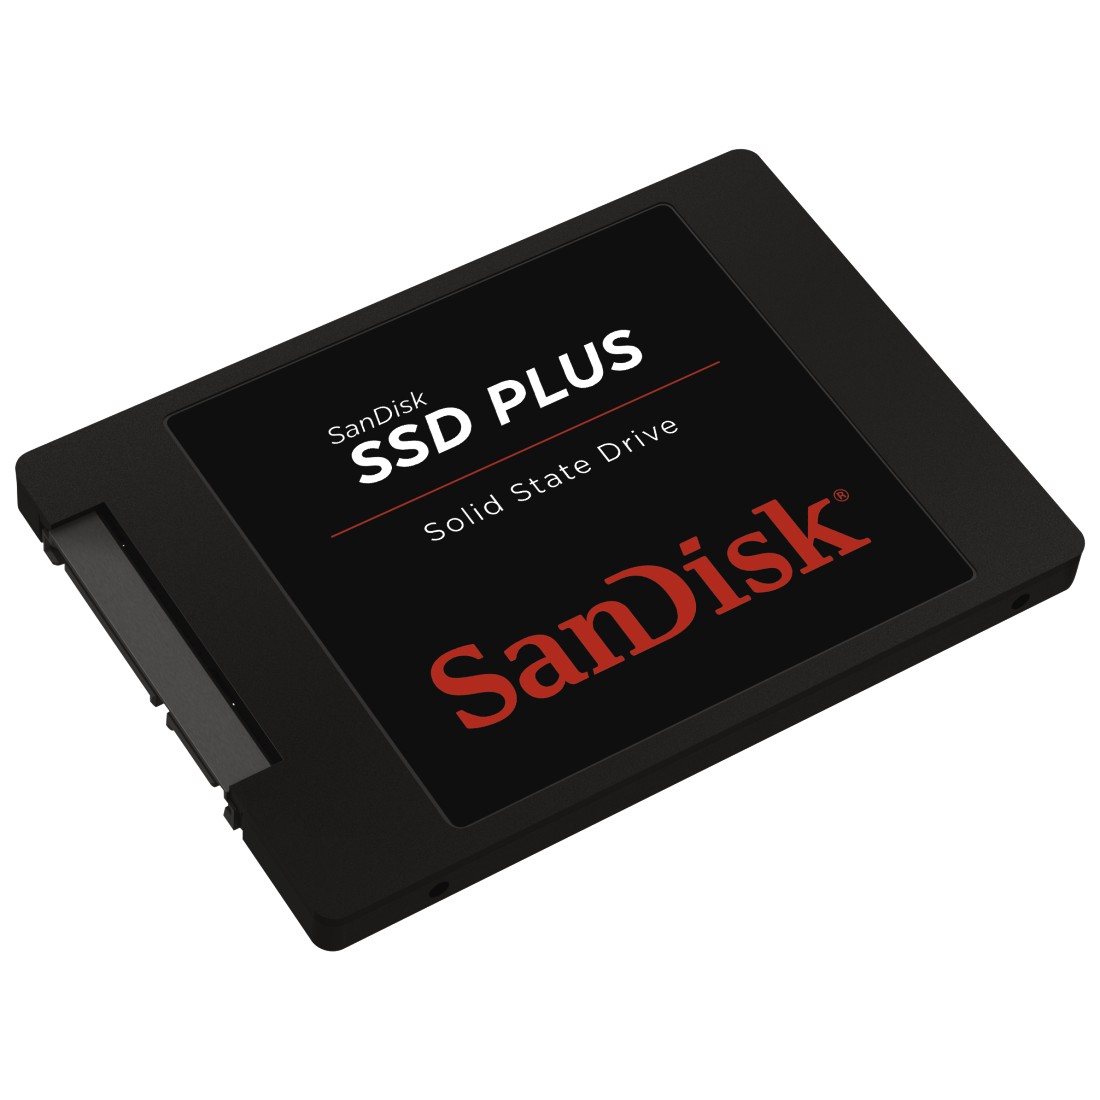 Sandisk SSD Plus, 480GB, SATA III 2.5"-rychlost 535/445 MB/s (SDSSDA-480g-G26)